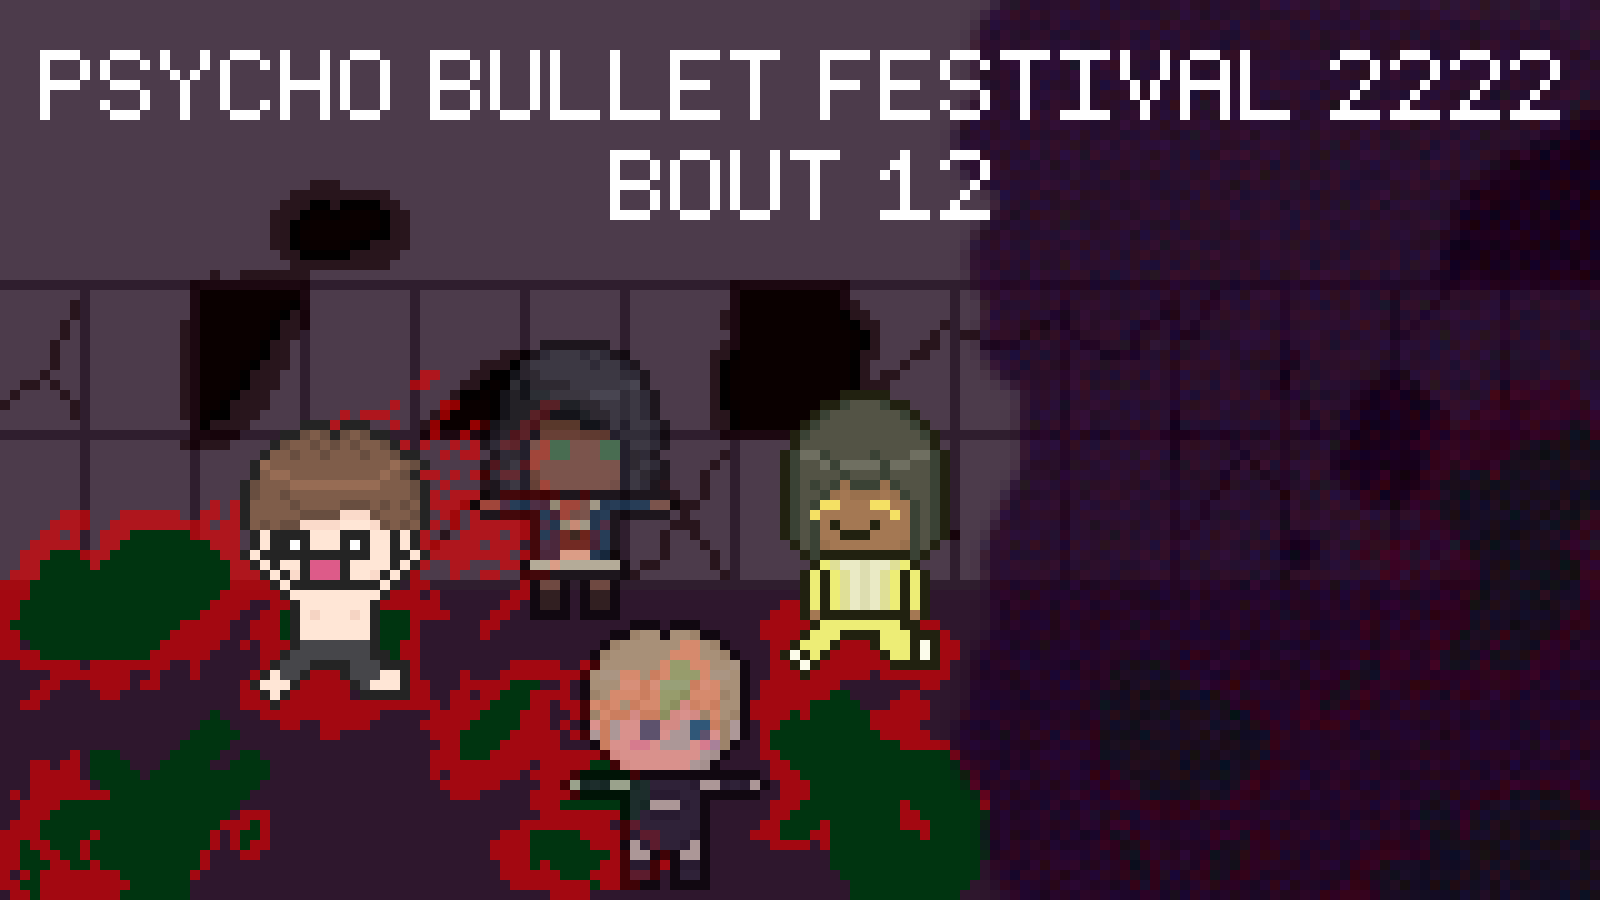 psycho-bullet-festival-2222-ch-12.png